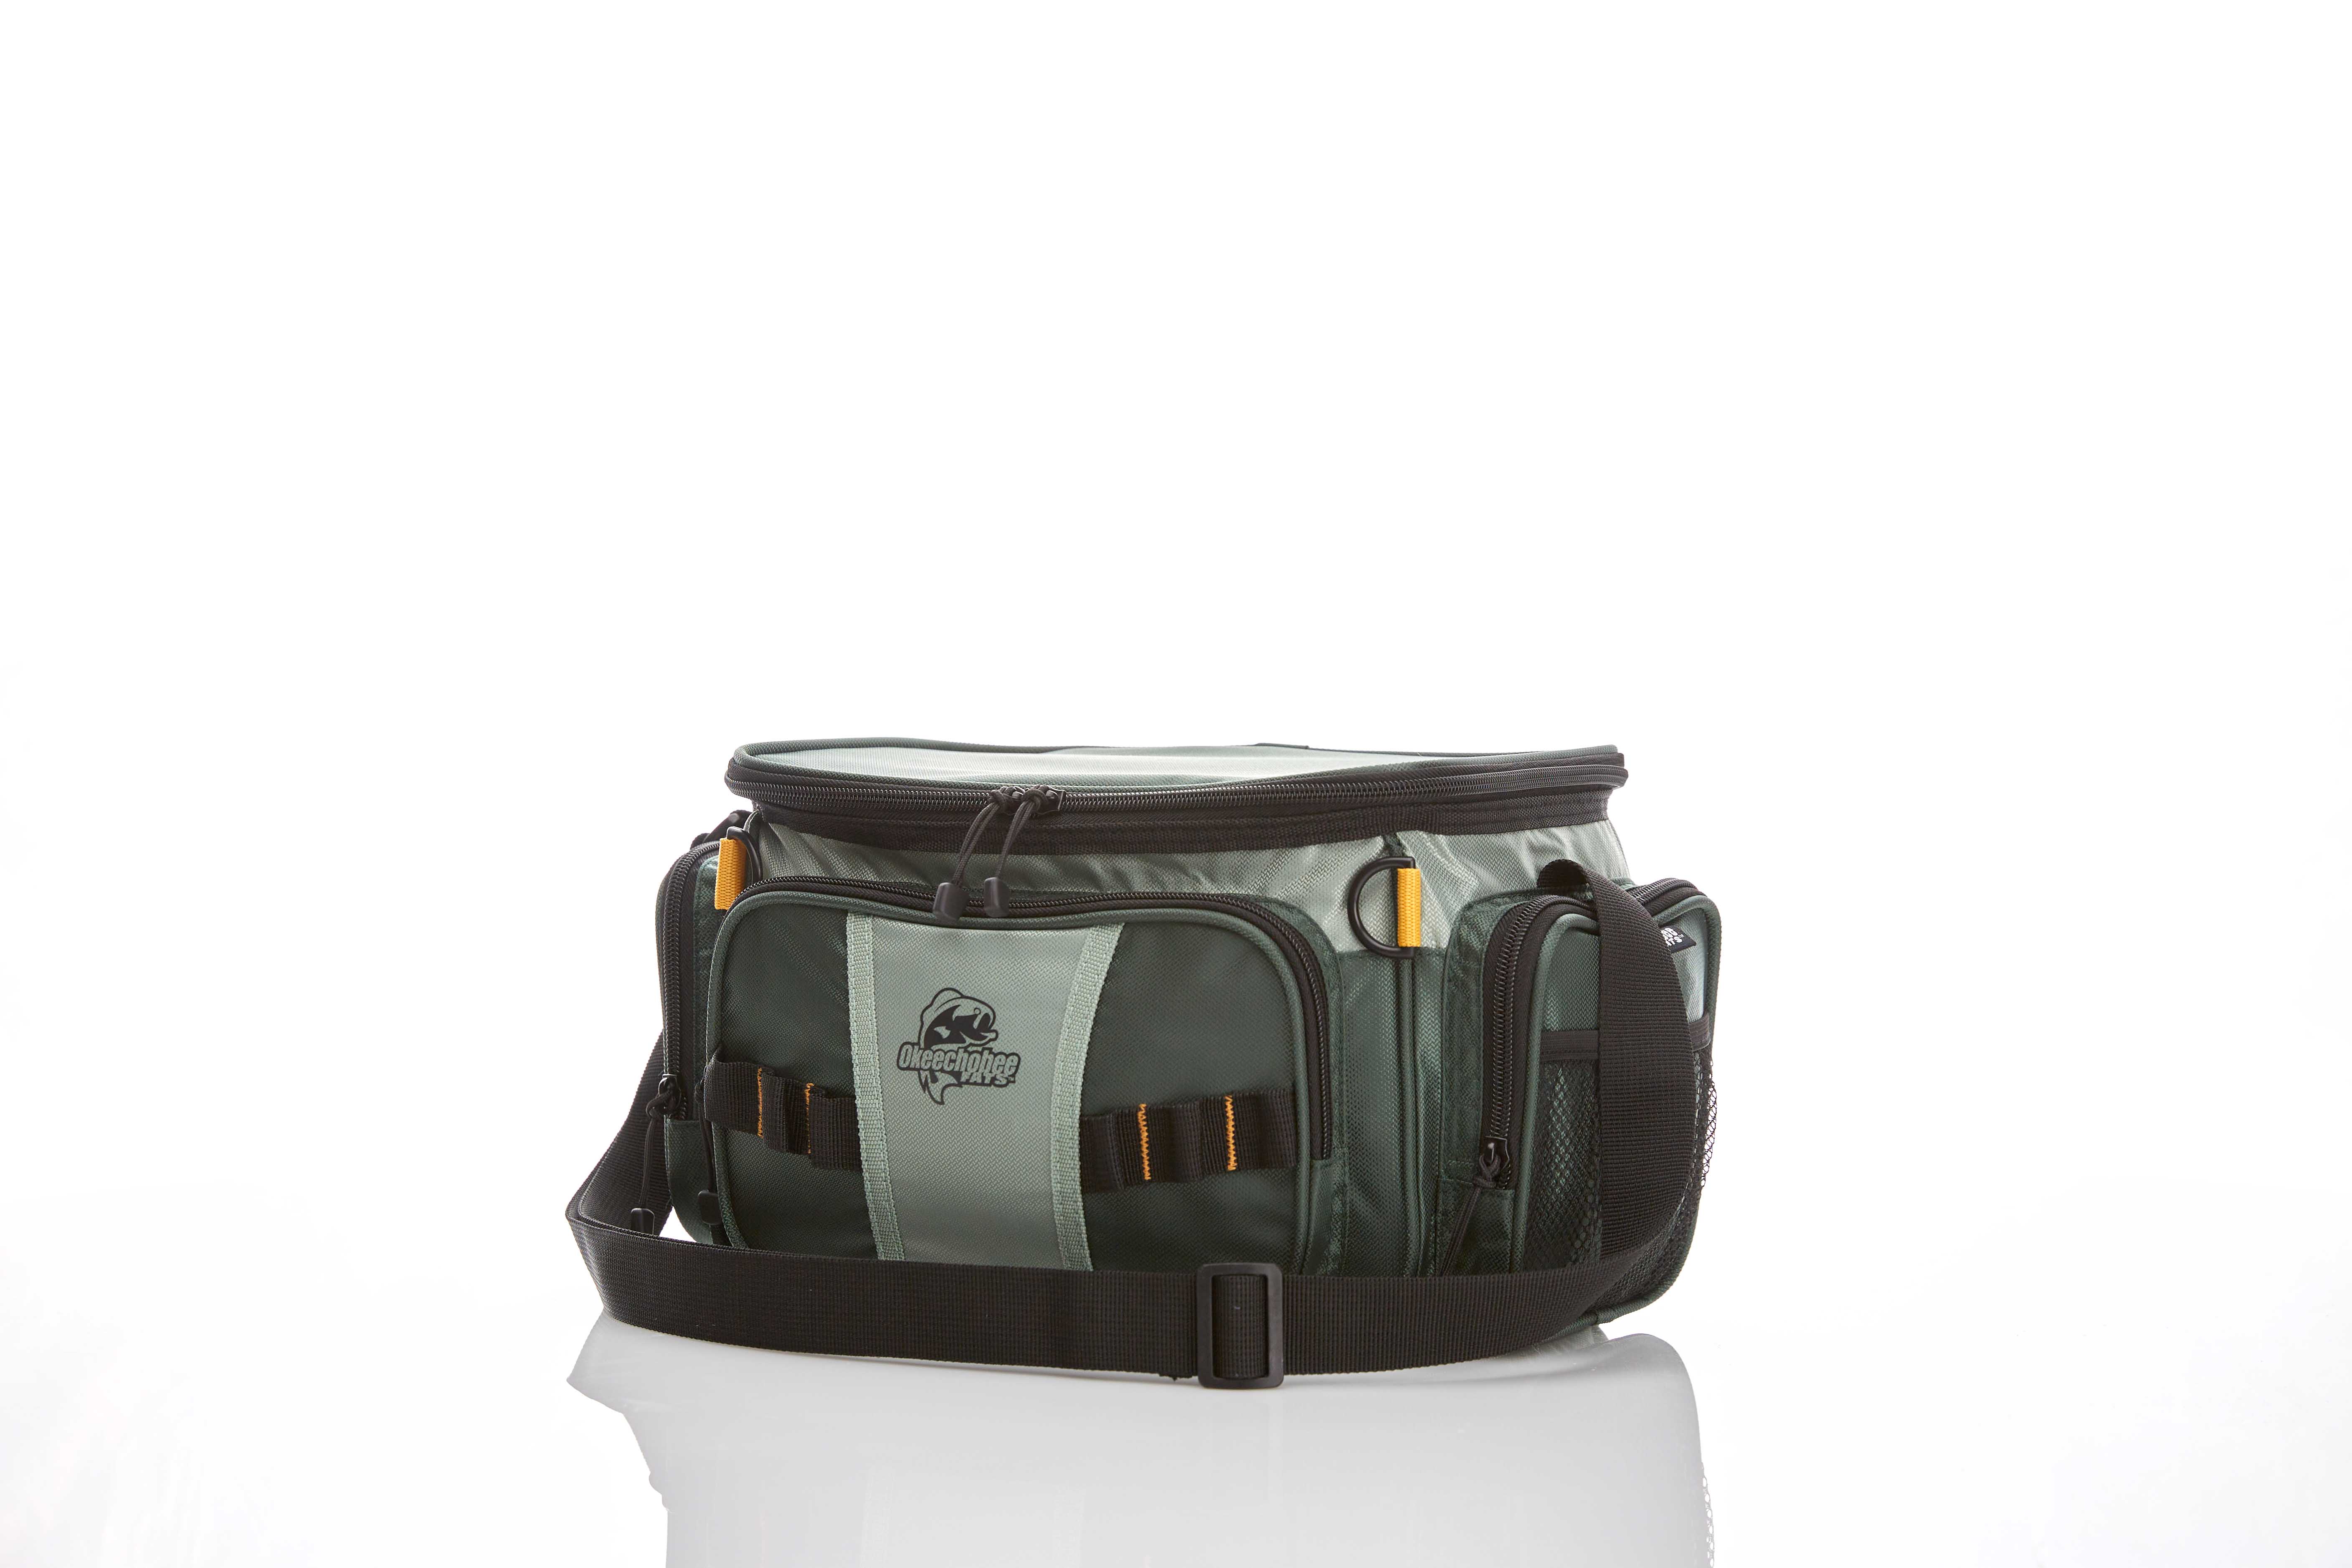  Okeechobee Fats Medium Fishing Gear Tackle Bag Soft Sided  Fishing Bag, Includes 2 Fishing Accessories Utility Boxes, Top Loading  Fishing Tackle Box Bag